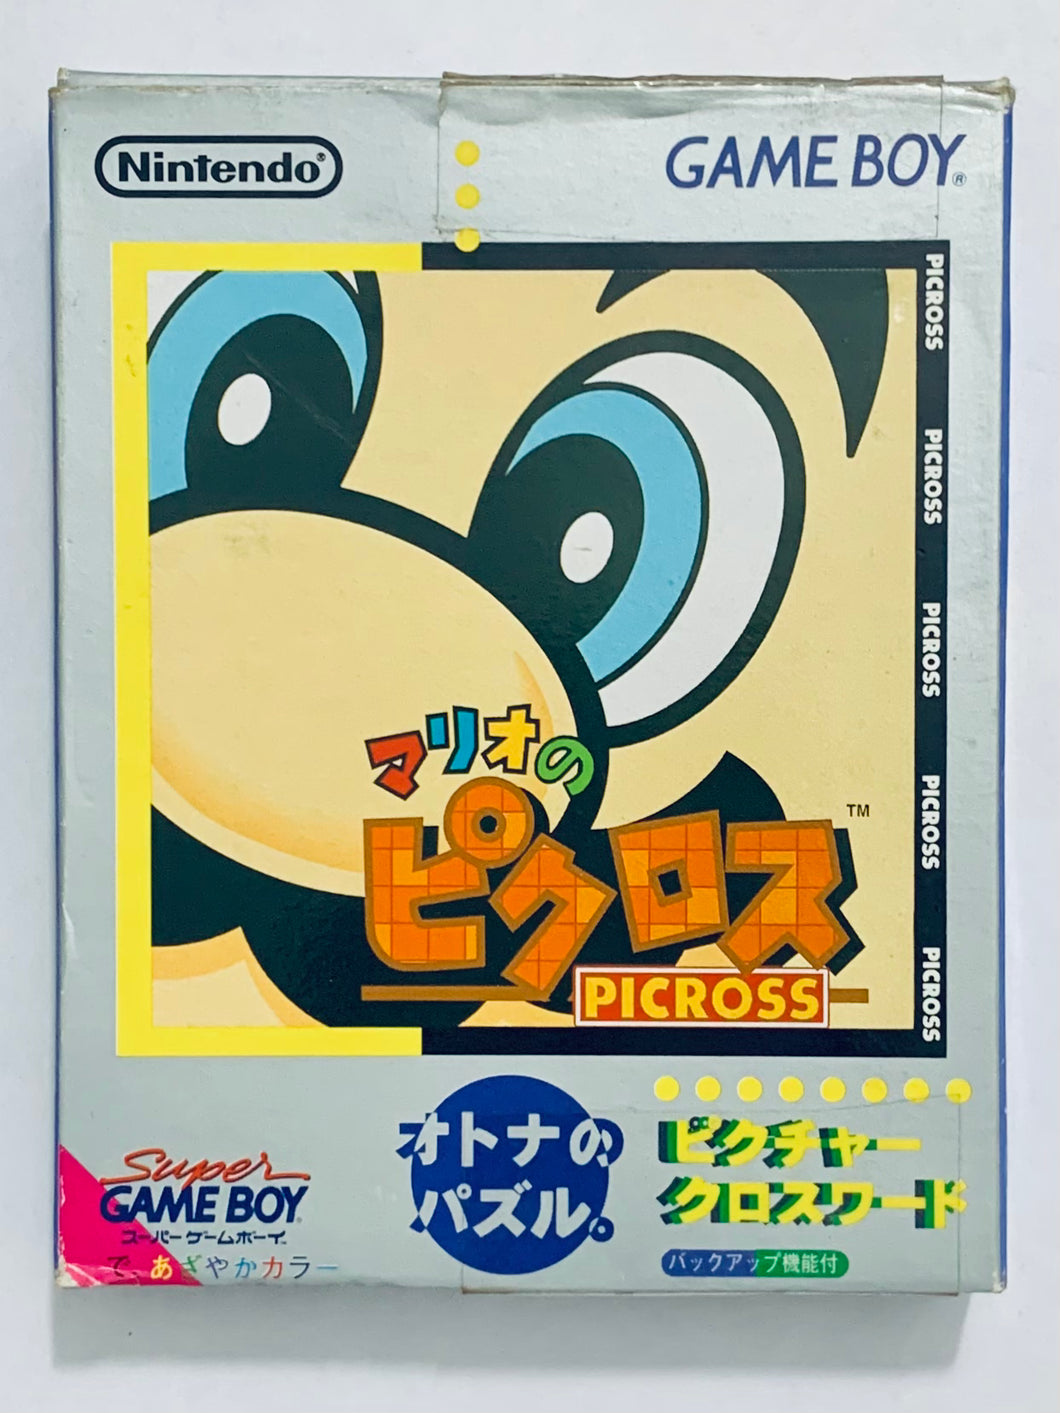 Mario no Picross - GameBoy - Game Boy - Pocket - GBC - GBA - JP - CIB (DMG-APCJ-JPN)